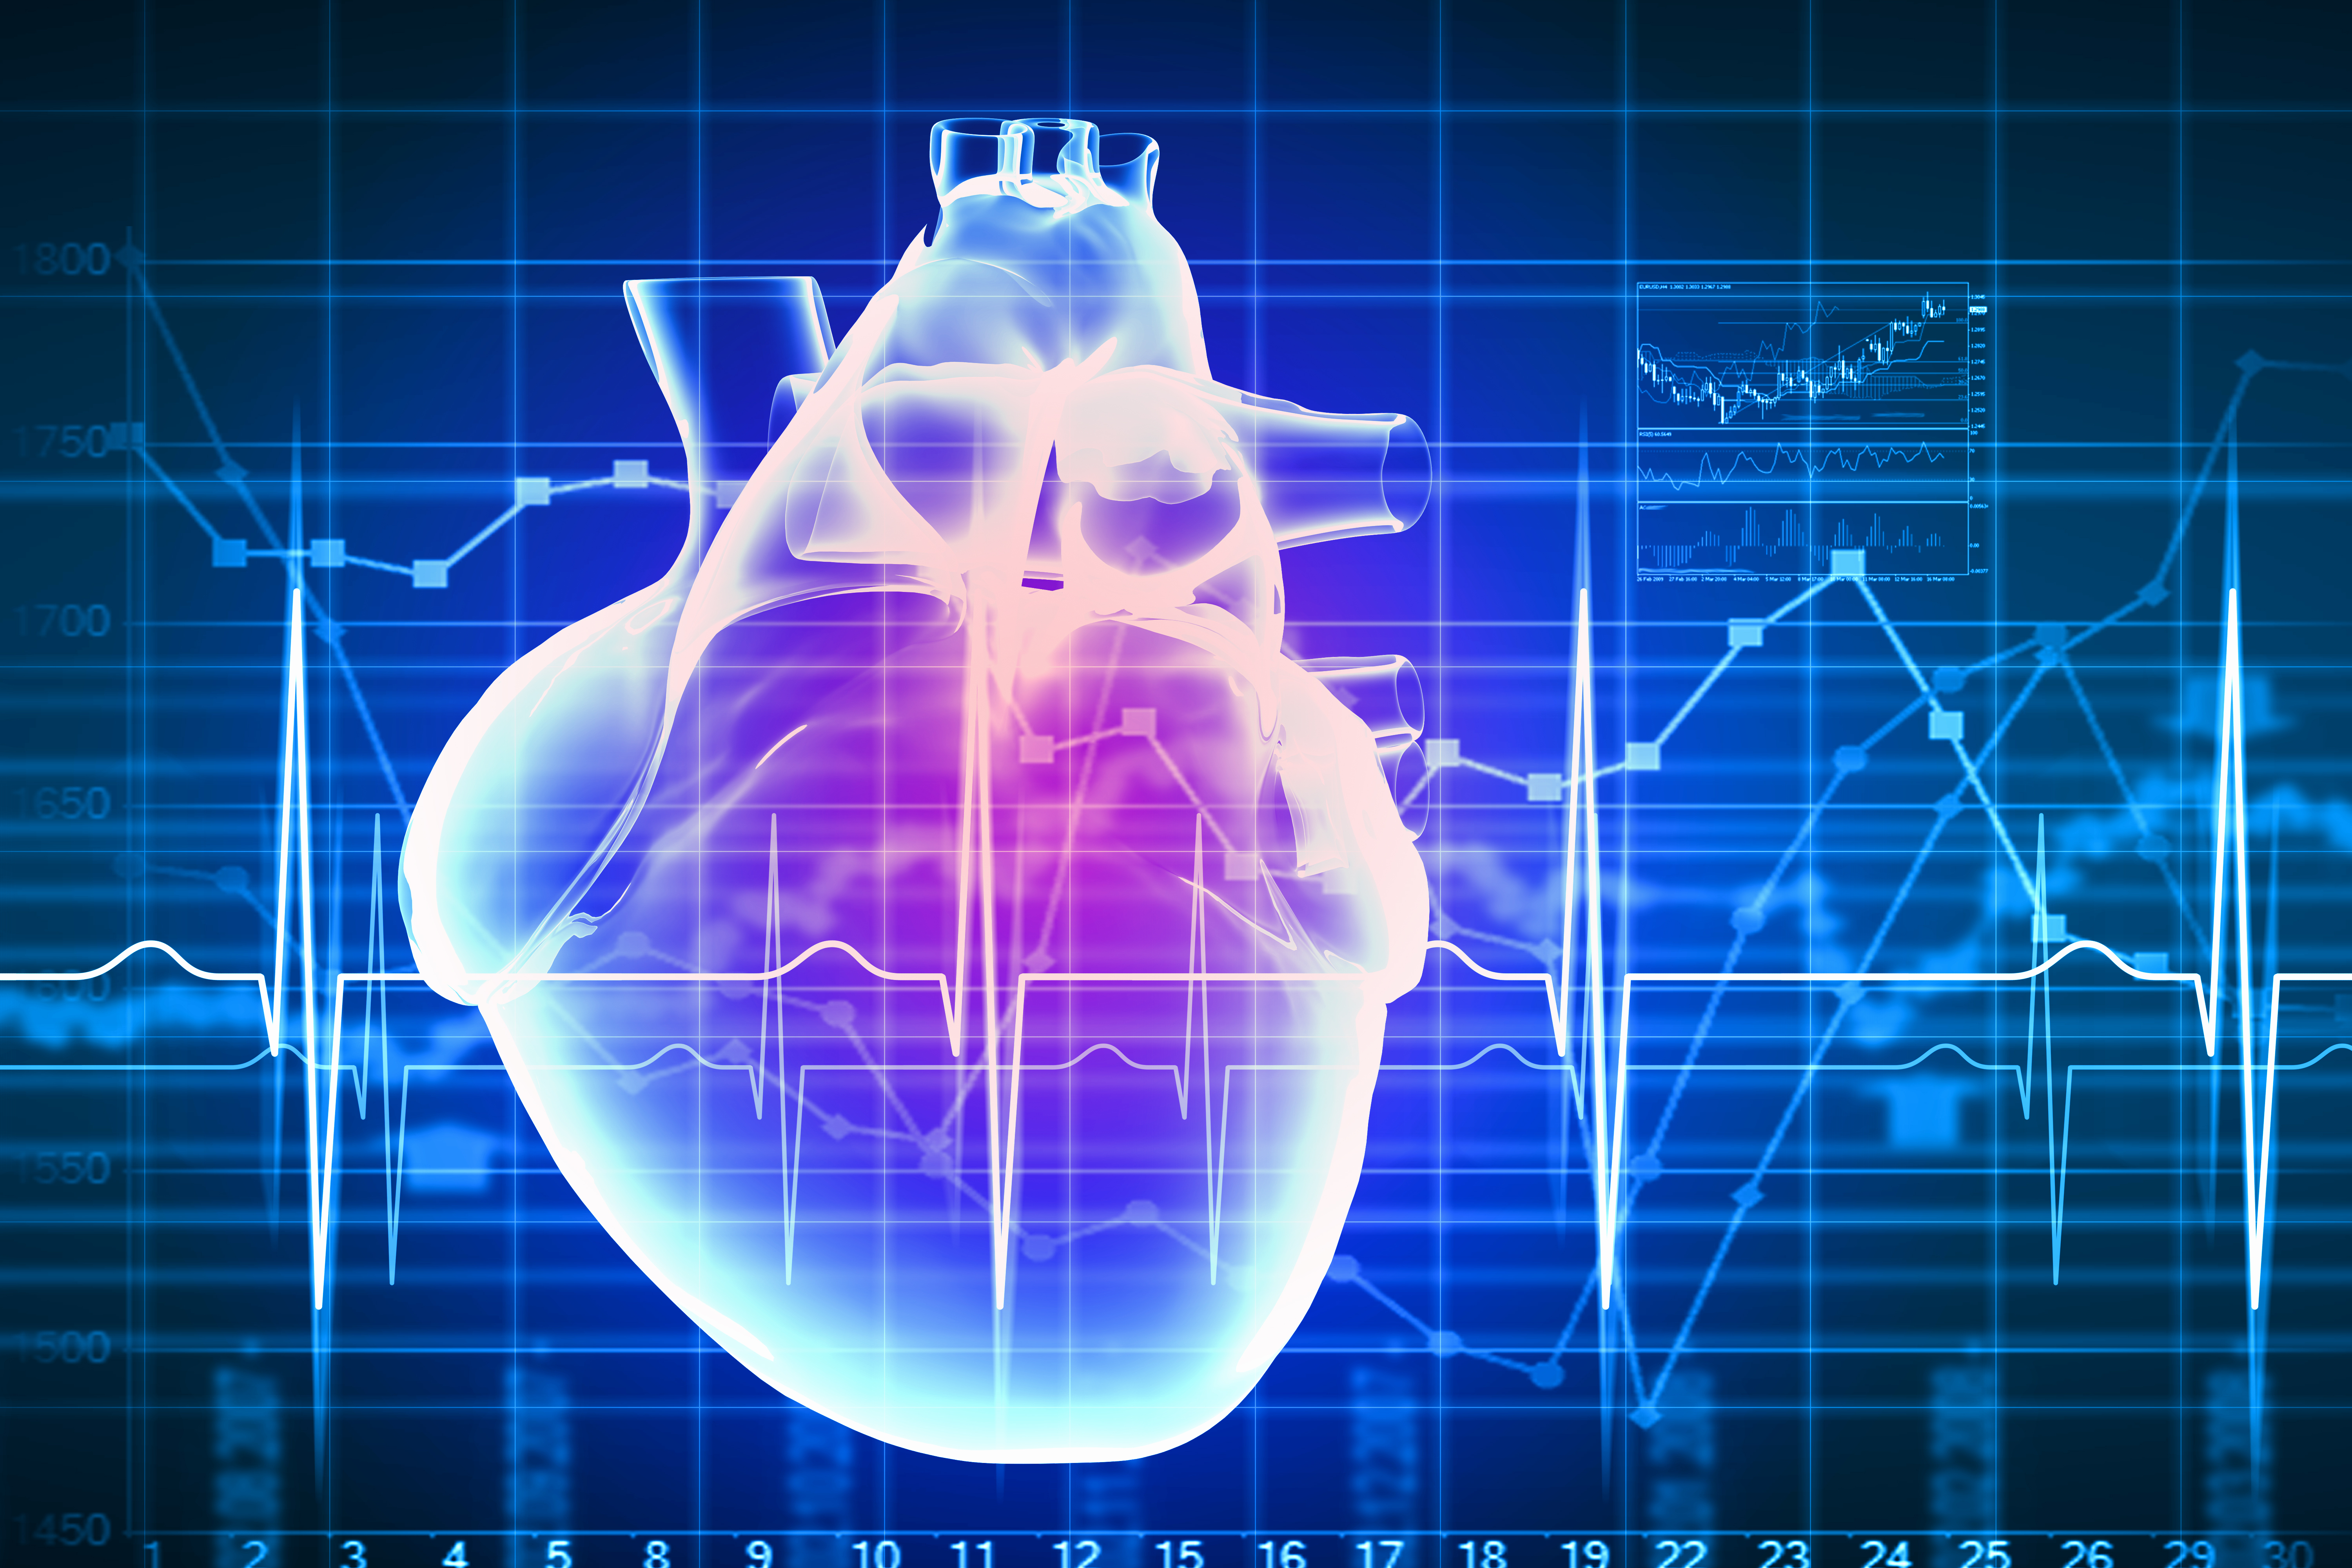 FA heart damage study